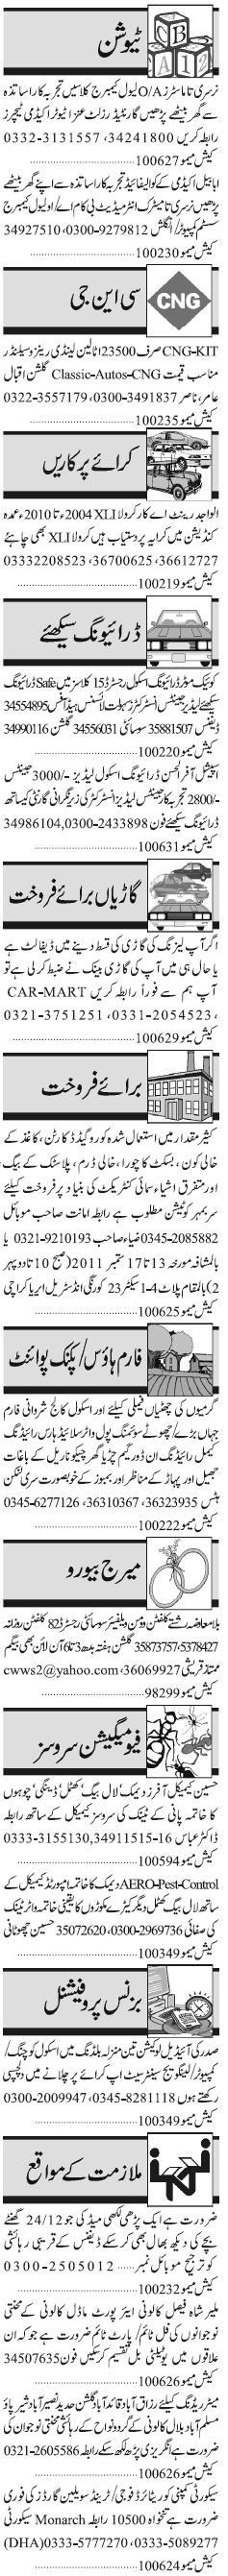 Jobs in Karachi -Classified 1